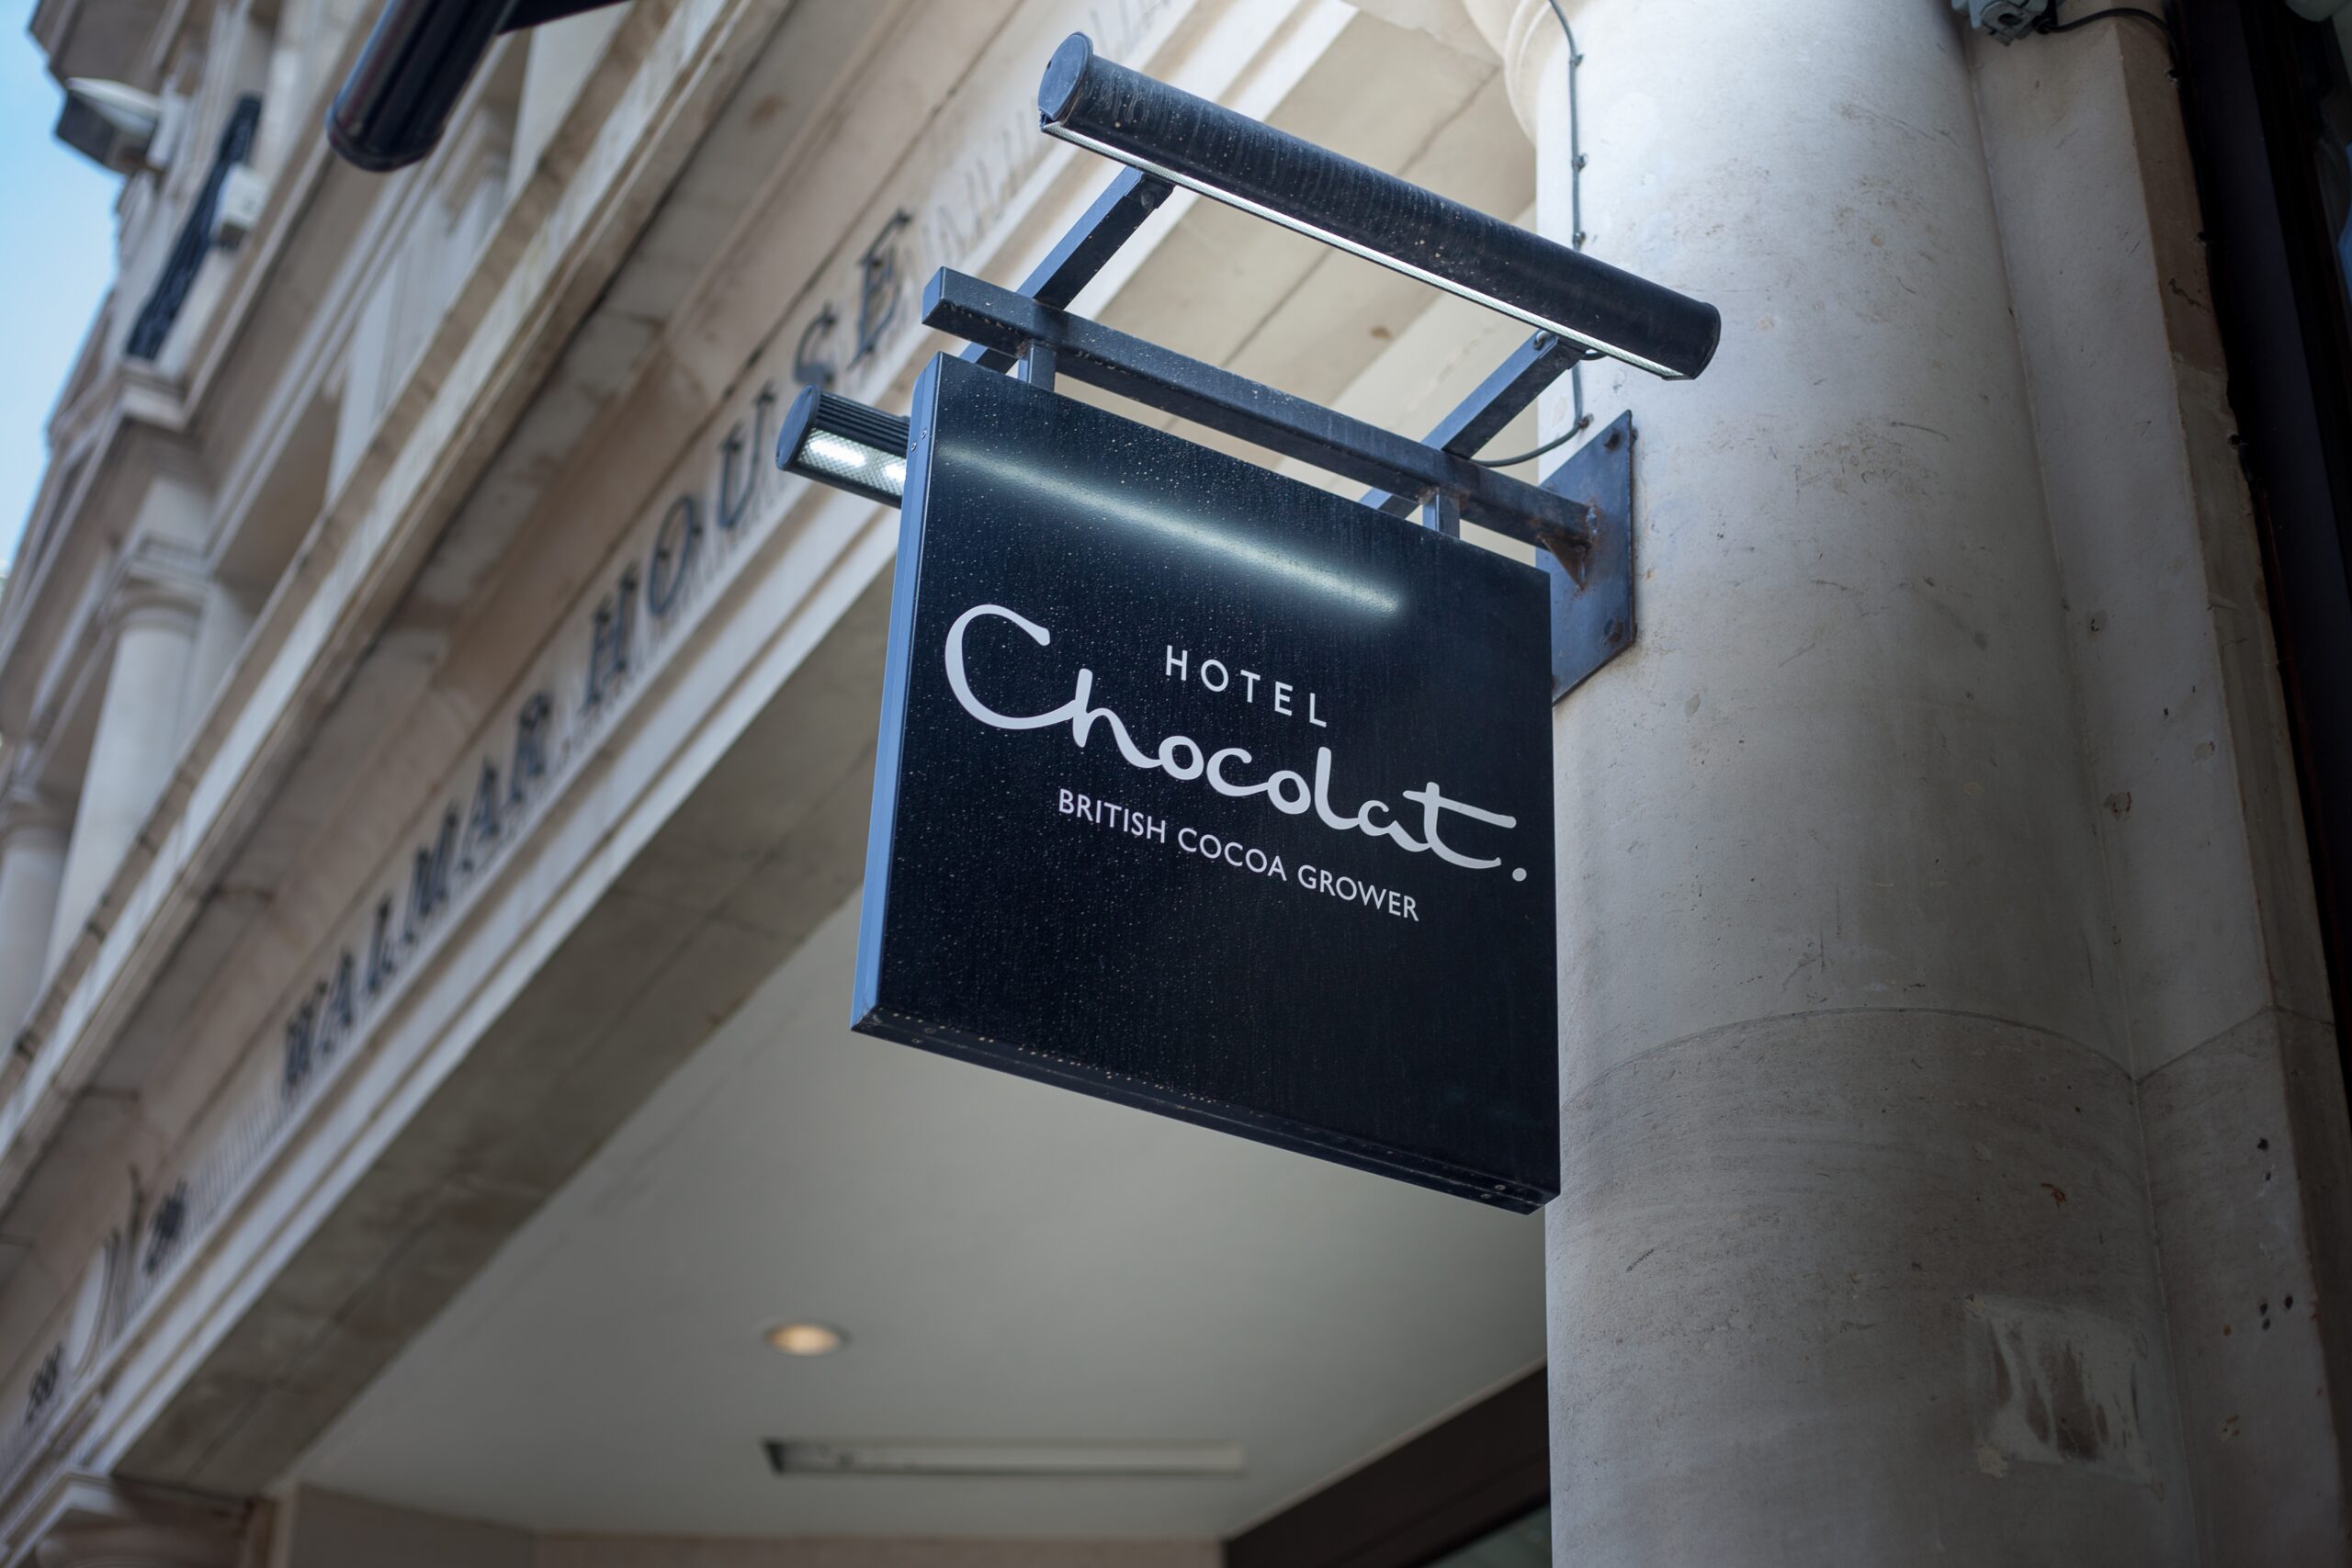 Hotel Chocolat Velvetiser Black Friday deals are still going strong